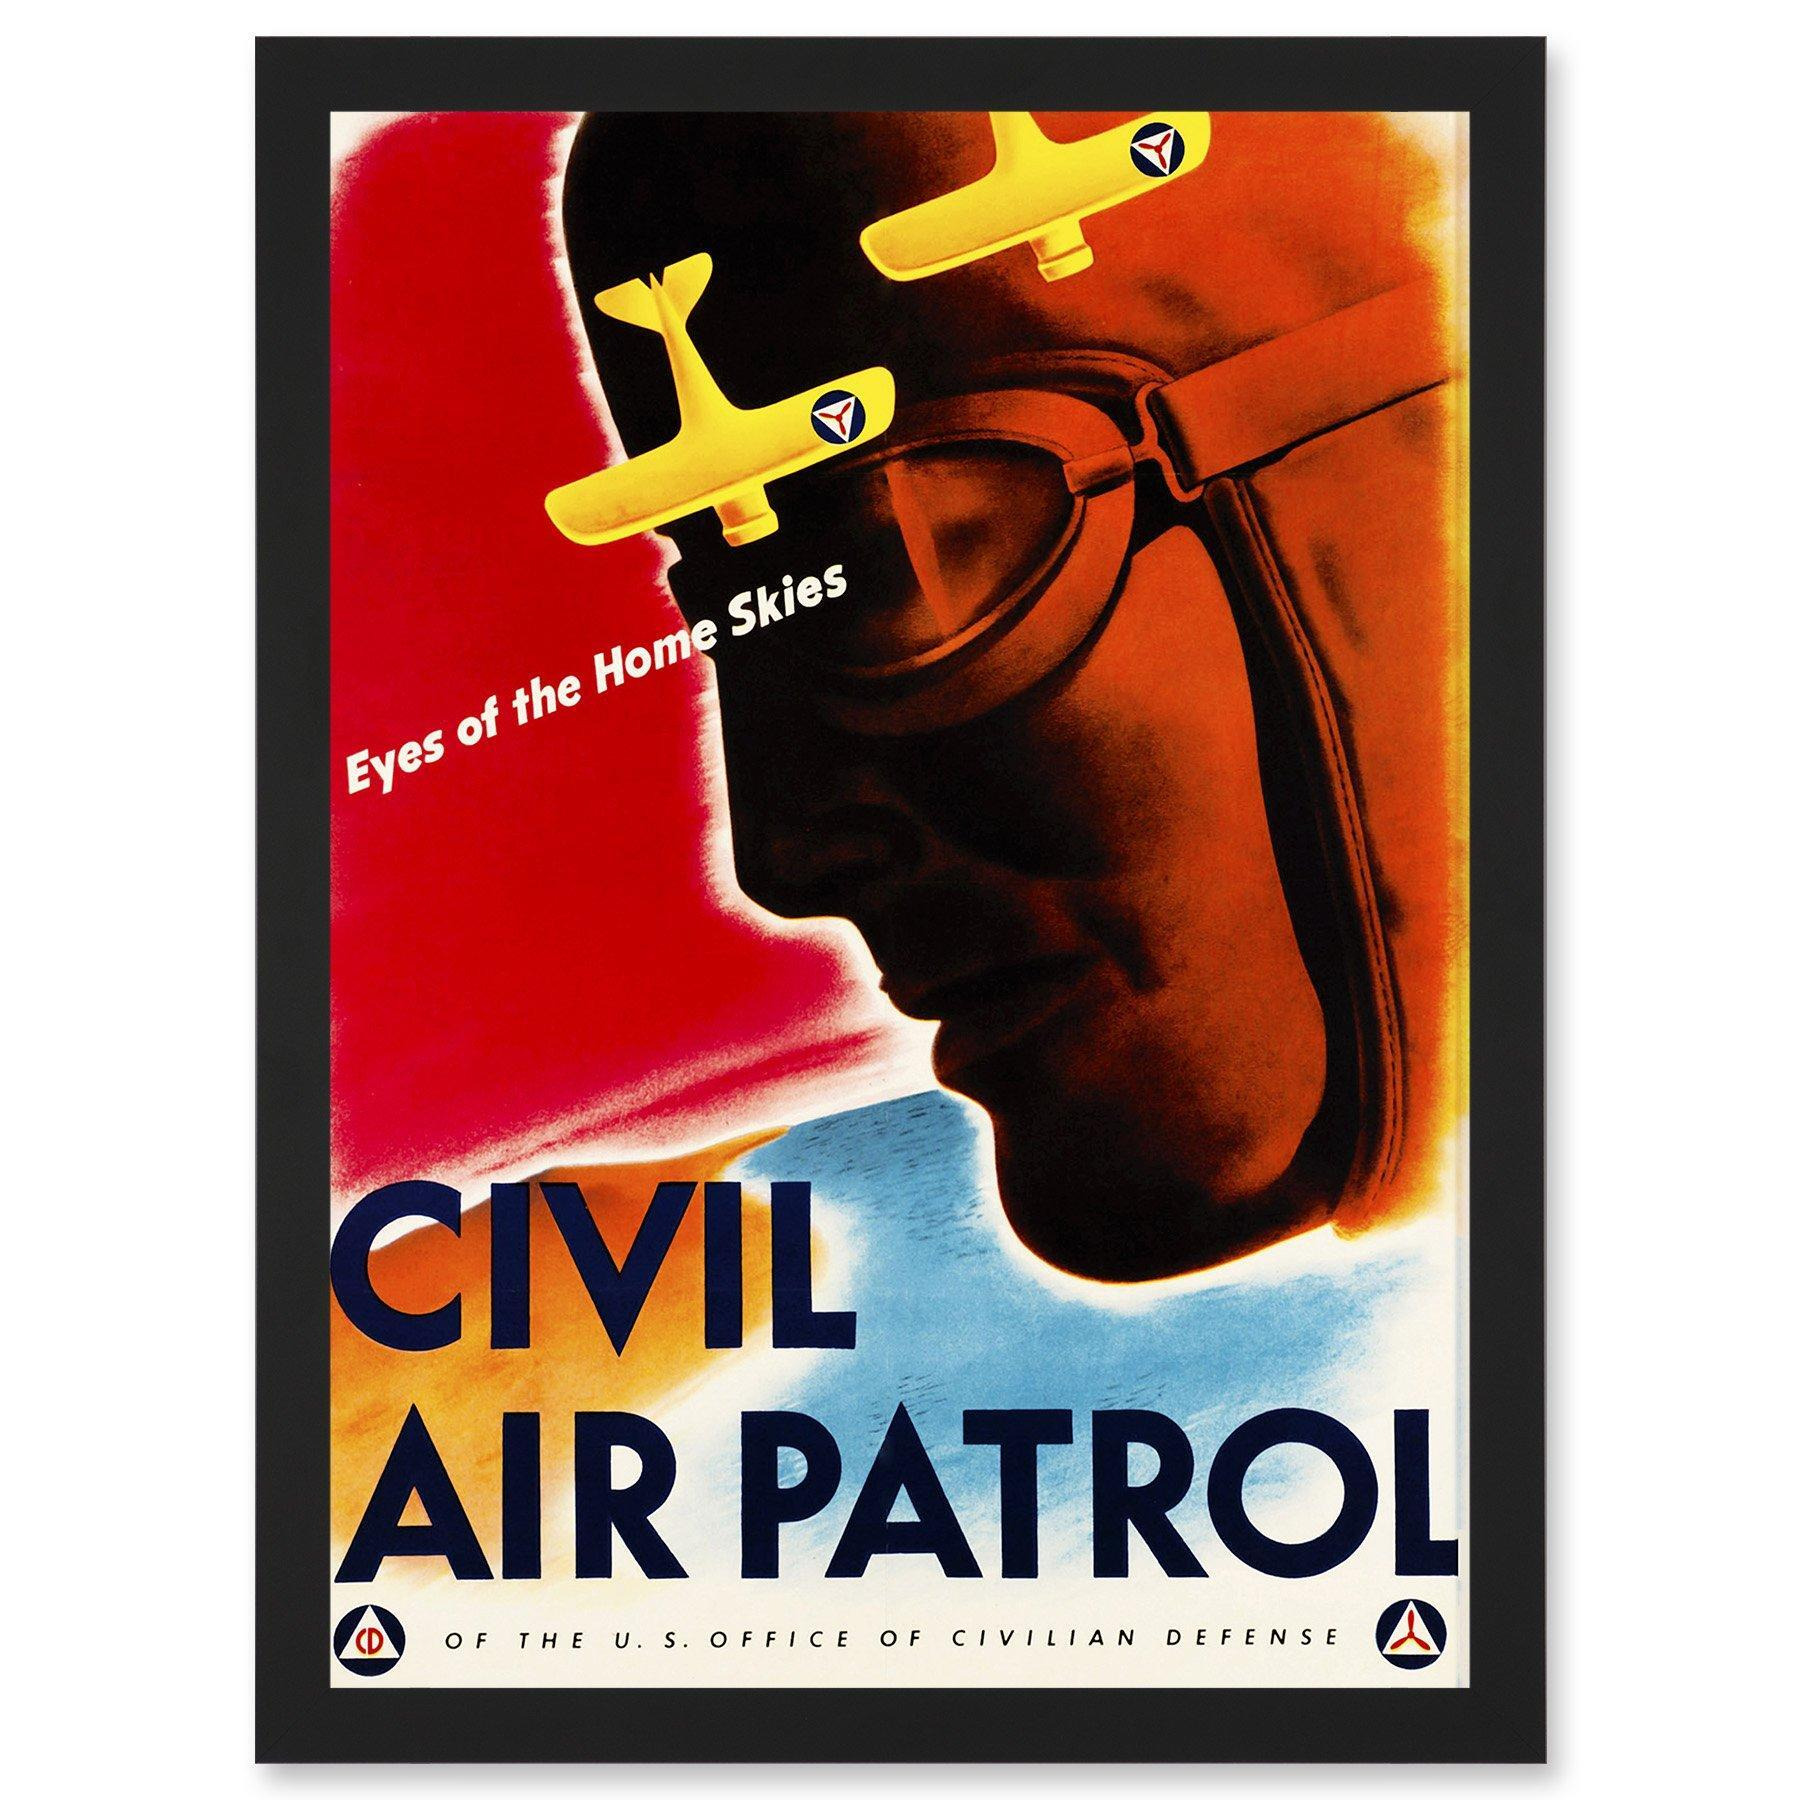 Political Military Civil Air Patrol Pilot USA Eyes Of The Home Skies A4 Artwork Framed Wall Art Print - image 1